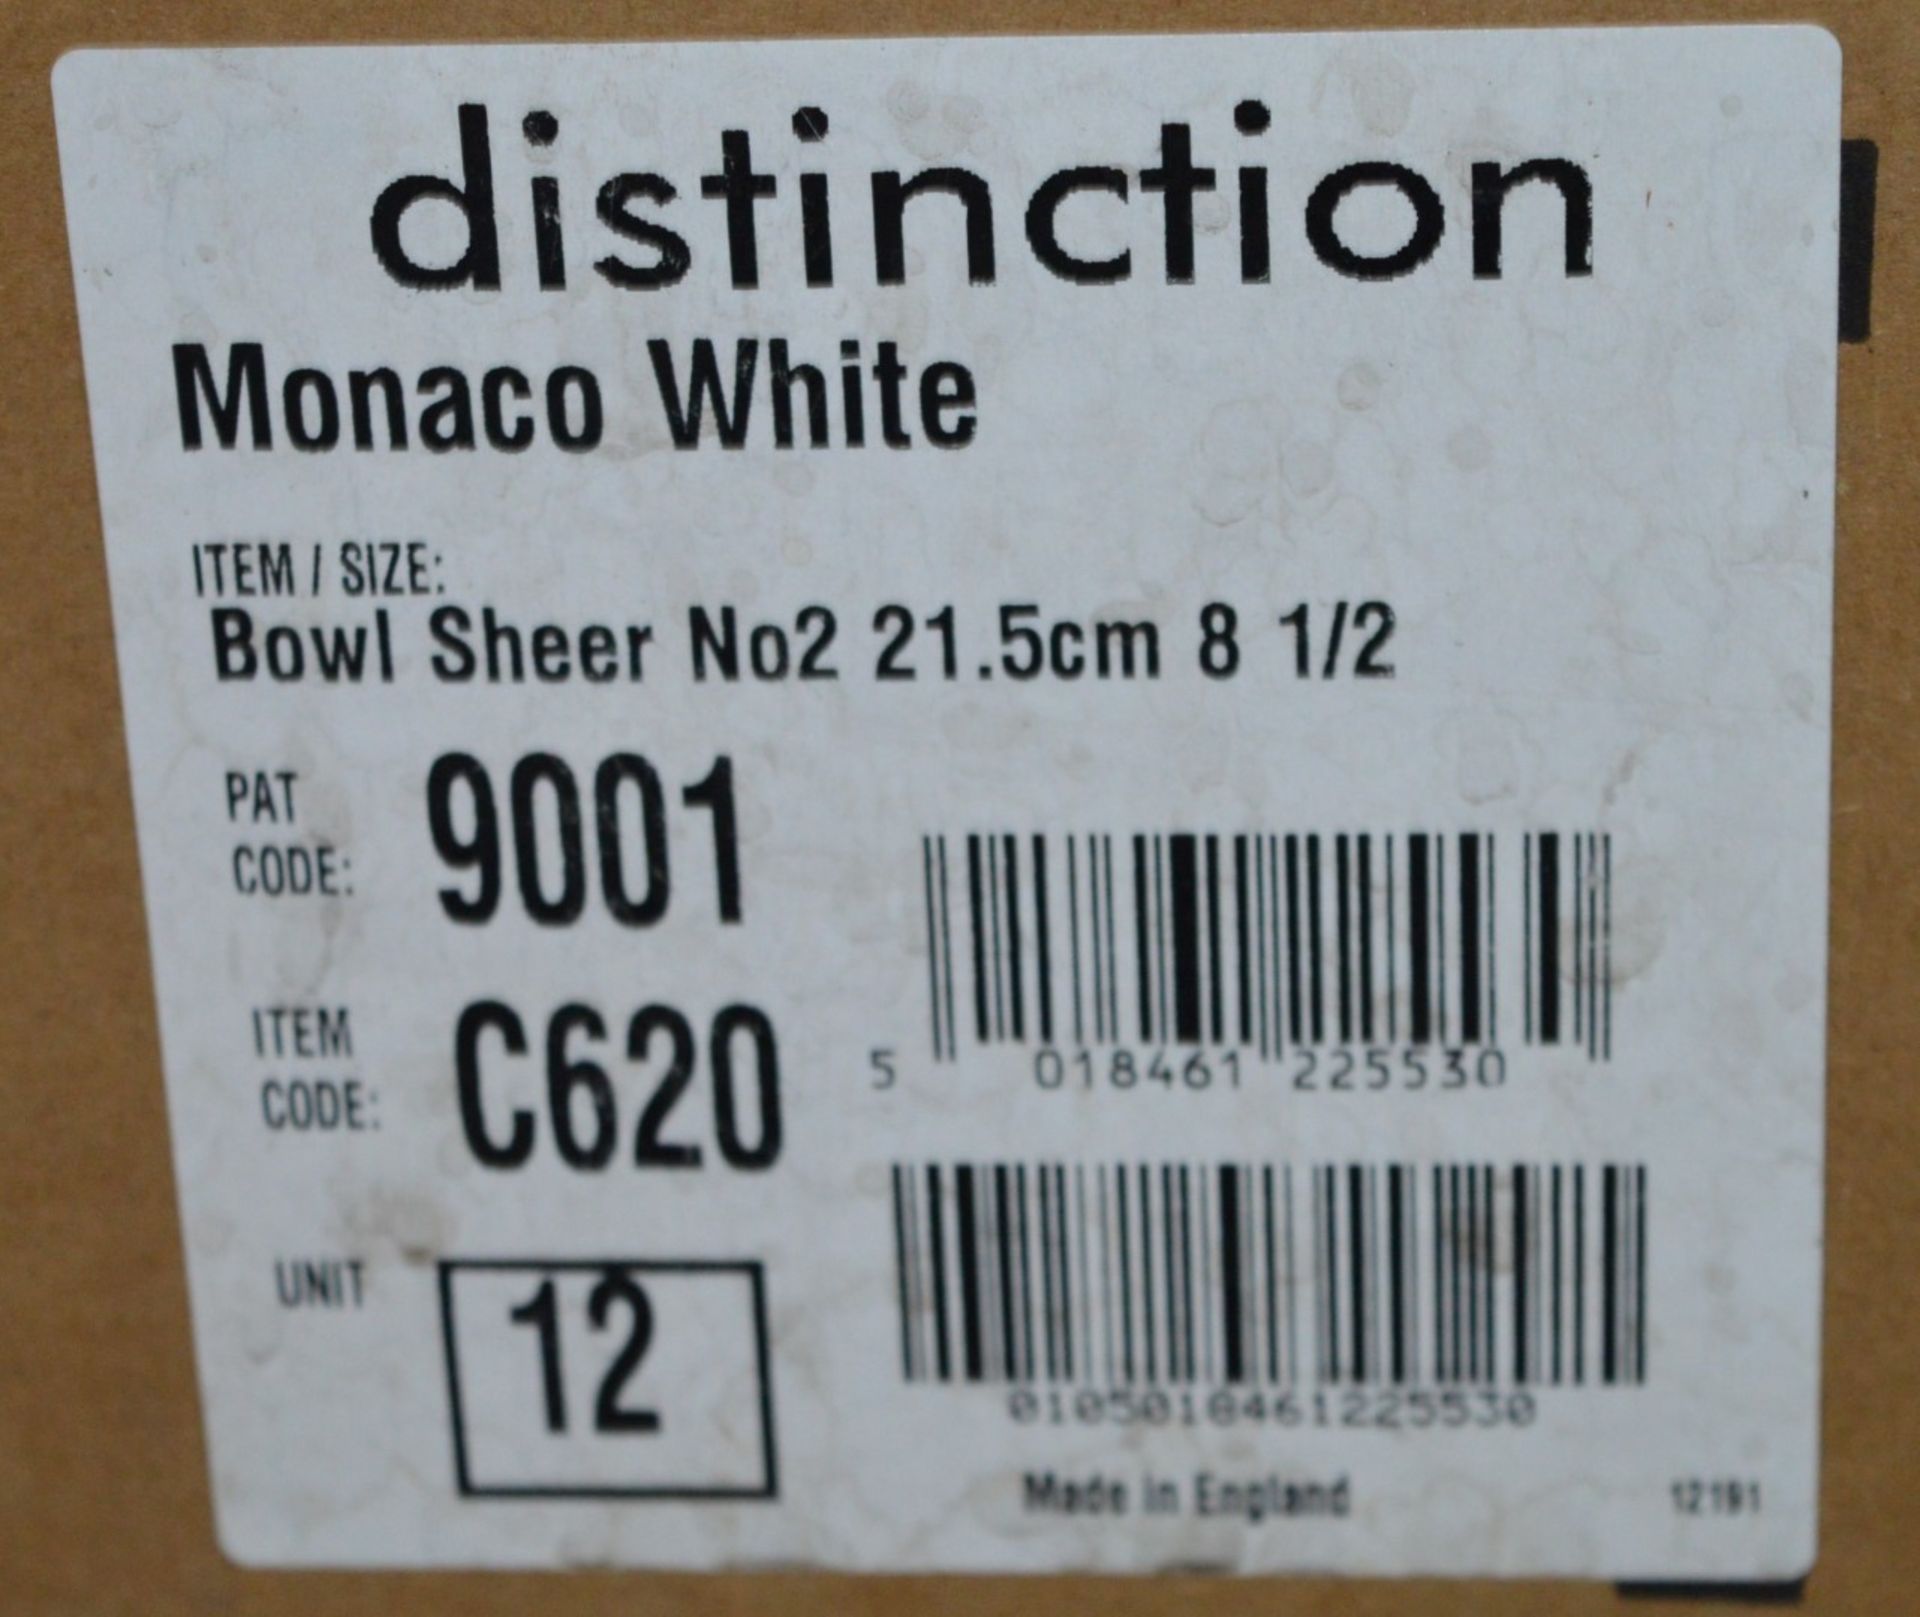 12 x Steelite Sheer Distinction Monaco White Bowls - 21.5cm - Product Code 9001C620 - New Boxed - Image 2 of 5